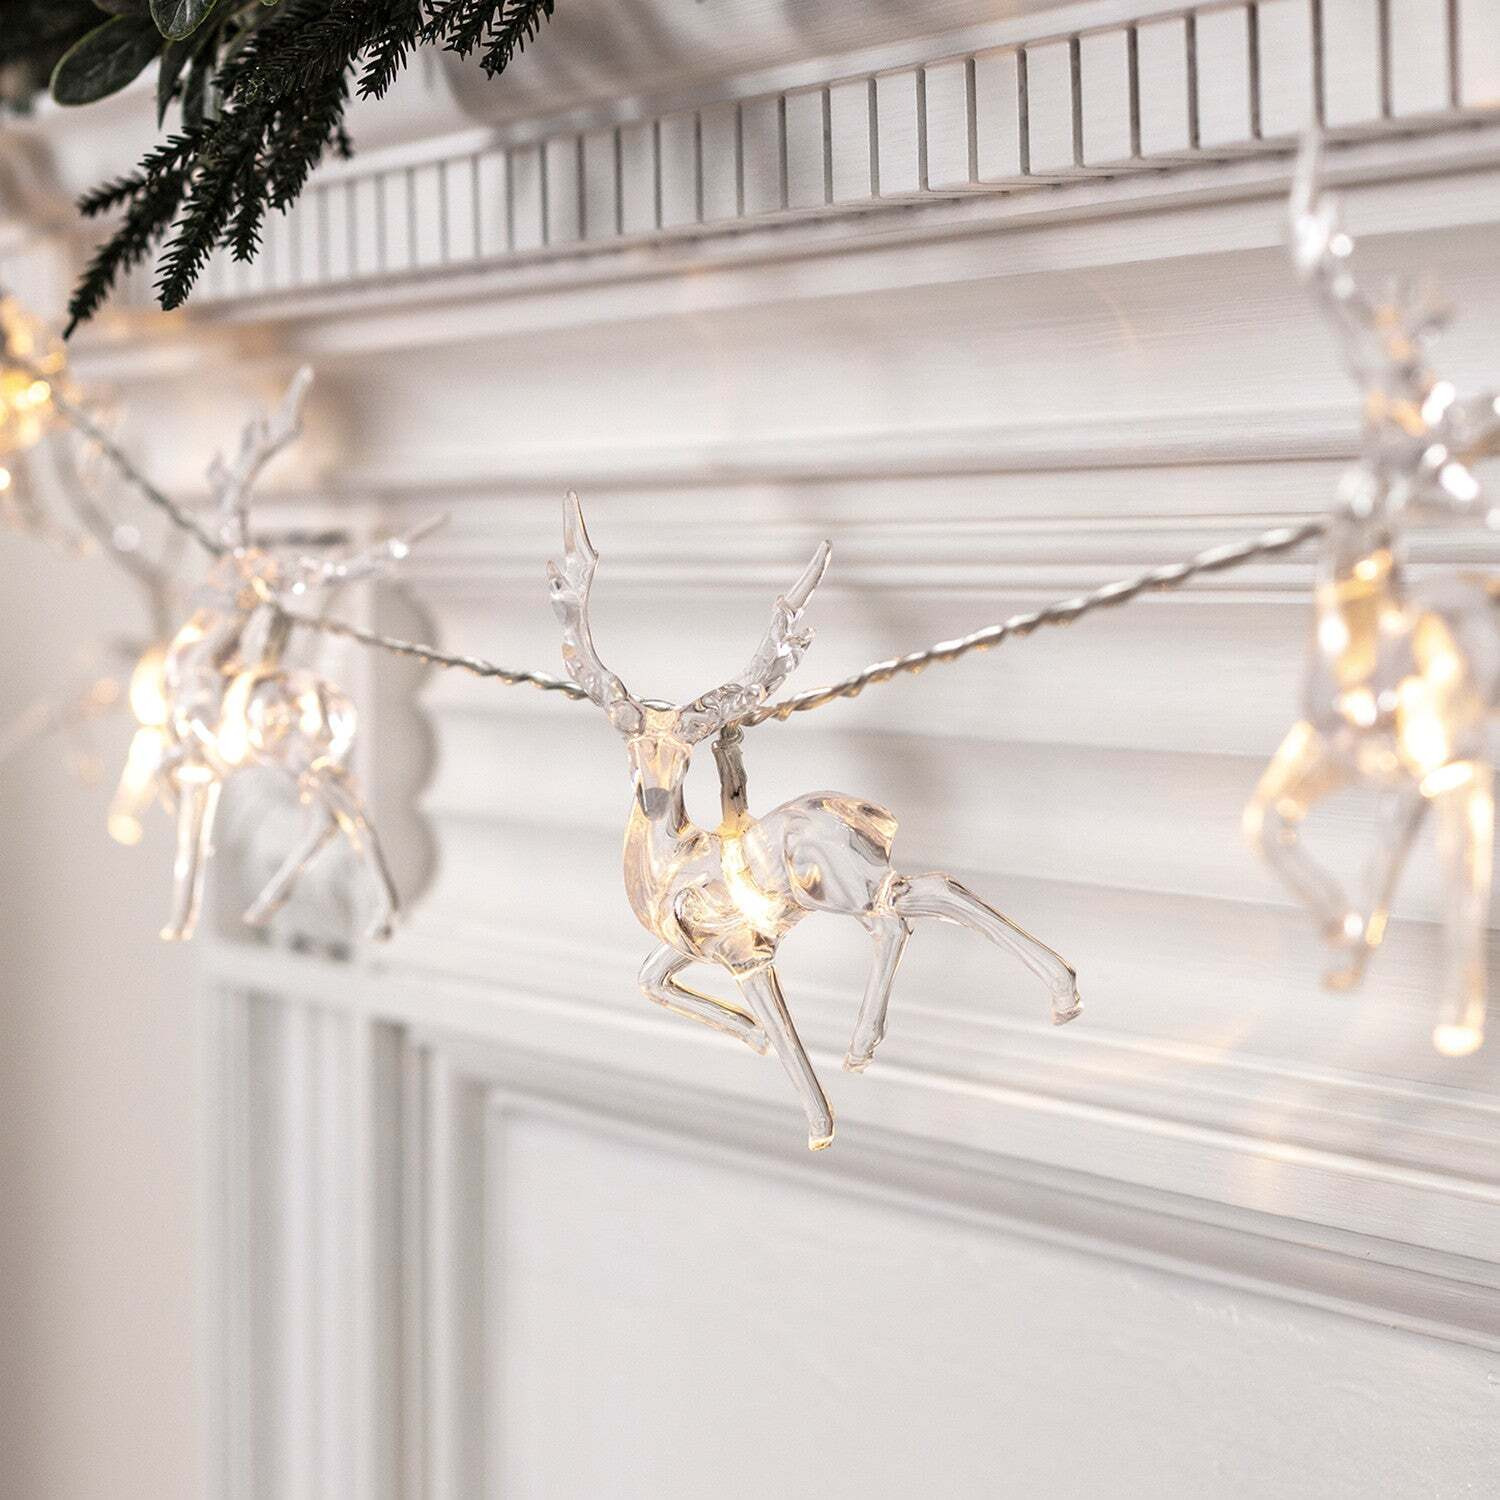 10 Warm White Reindeer Battery Christmas Fairy Lights - image 1